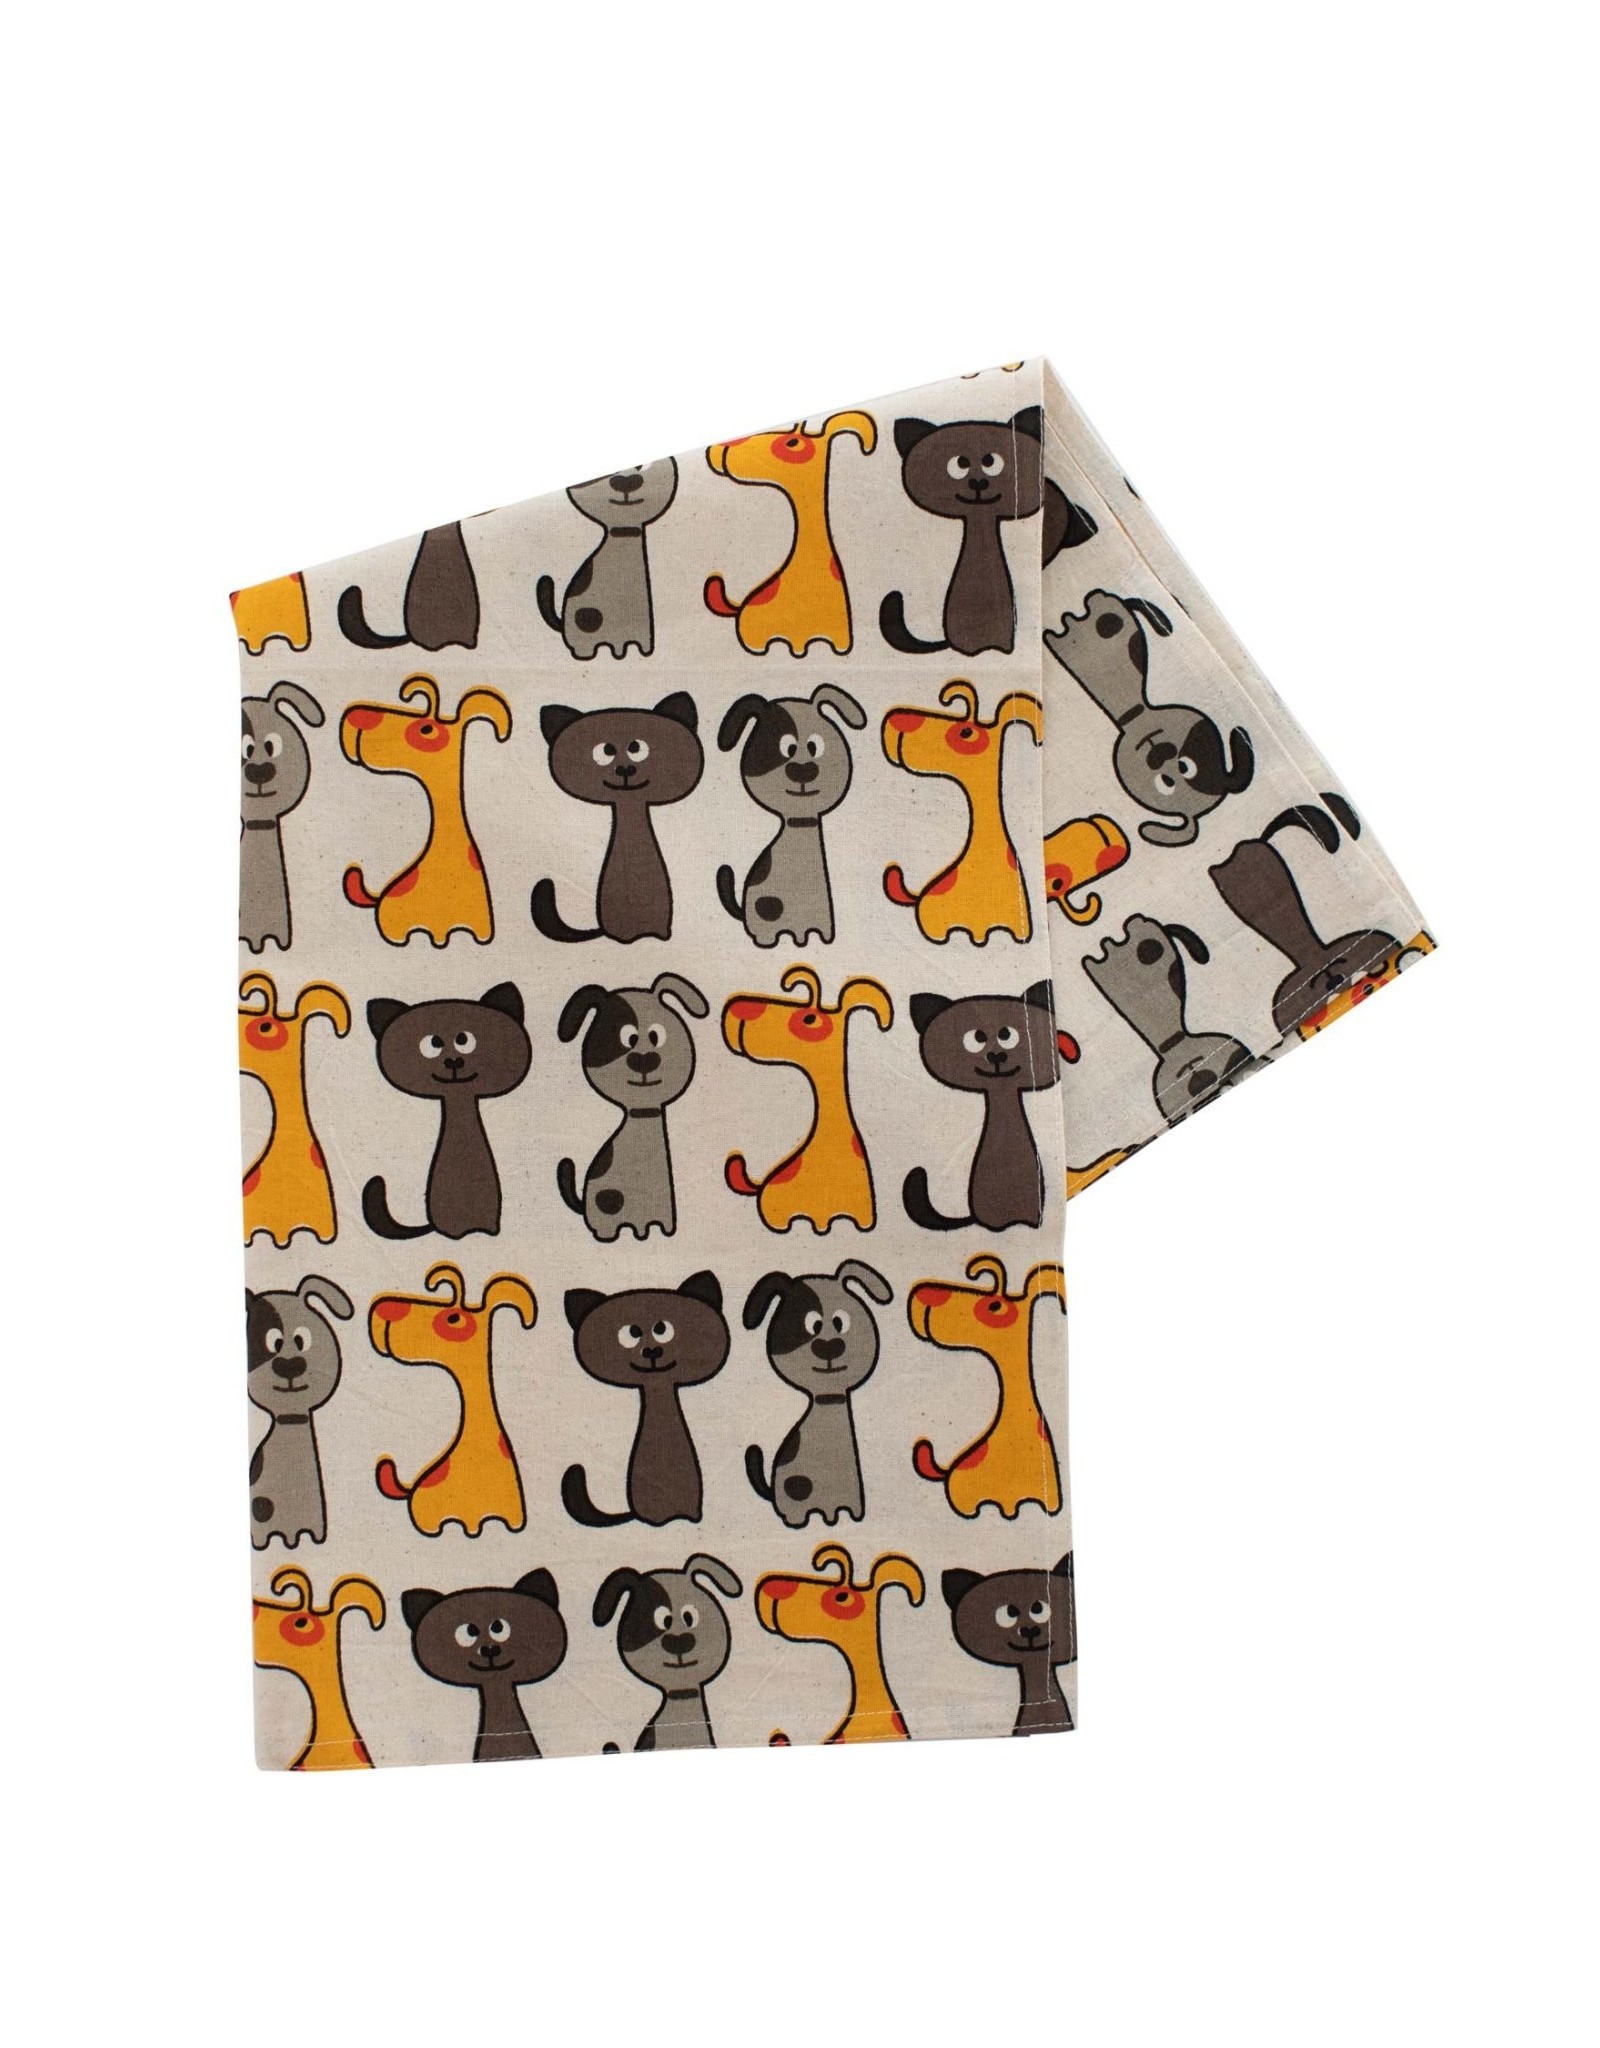 Trade roots Cat and Dog Tea Towel, India